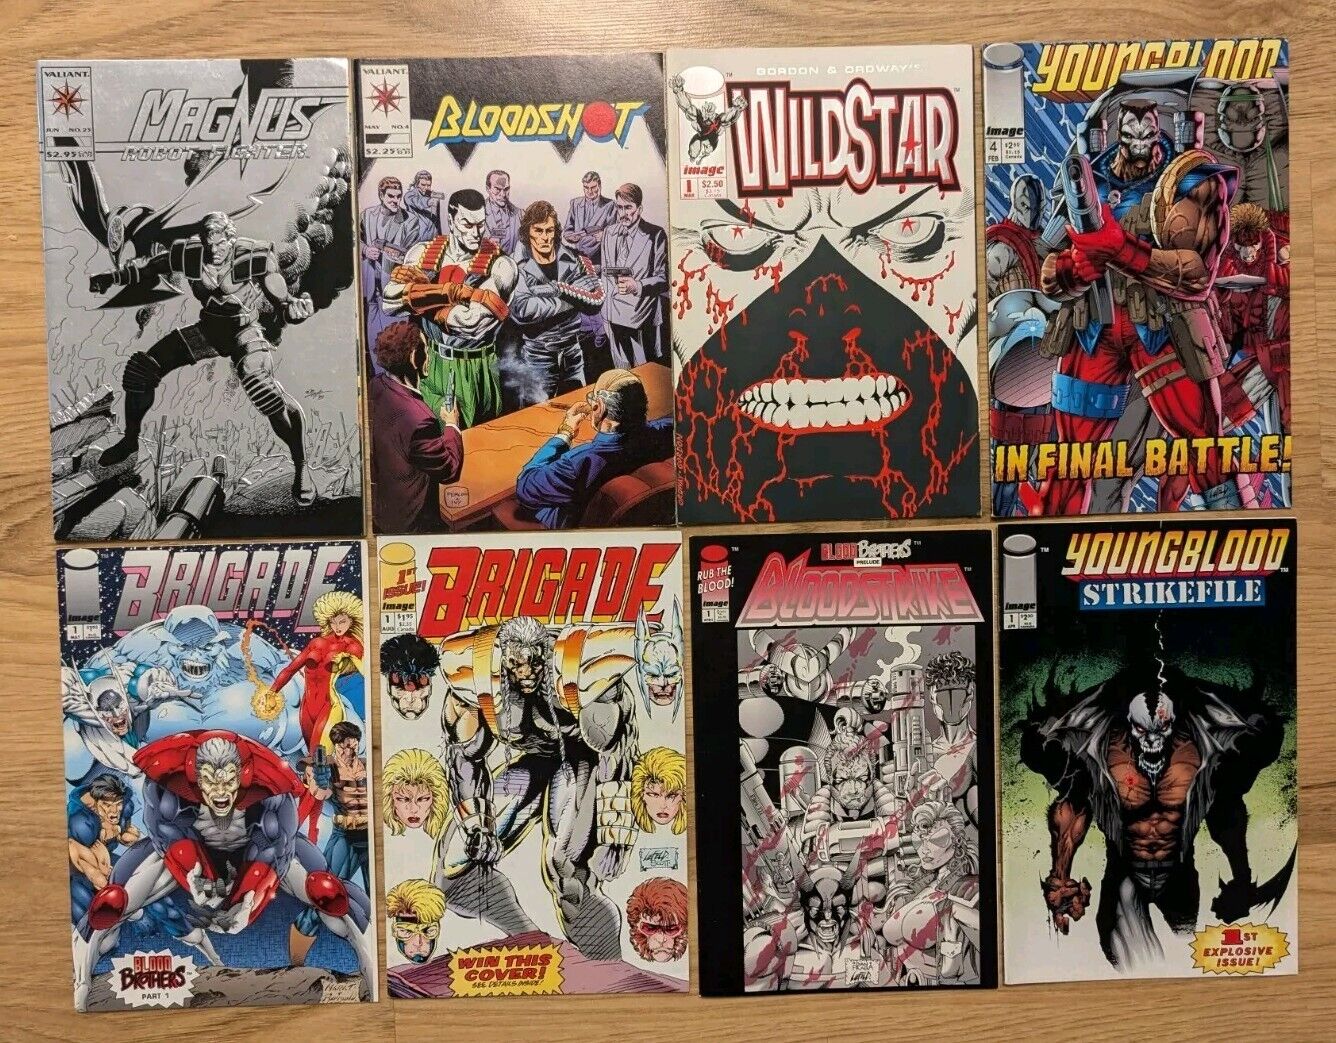 Lot Of 8 Valiant/Image Comics 1990s, Bloodshot, Magnus, Brigade, Wildstar #1s